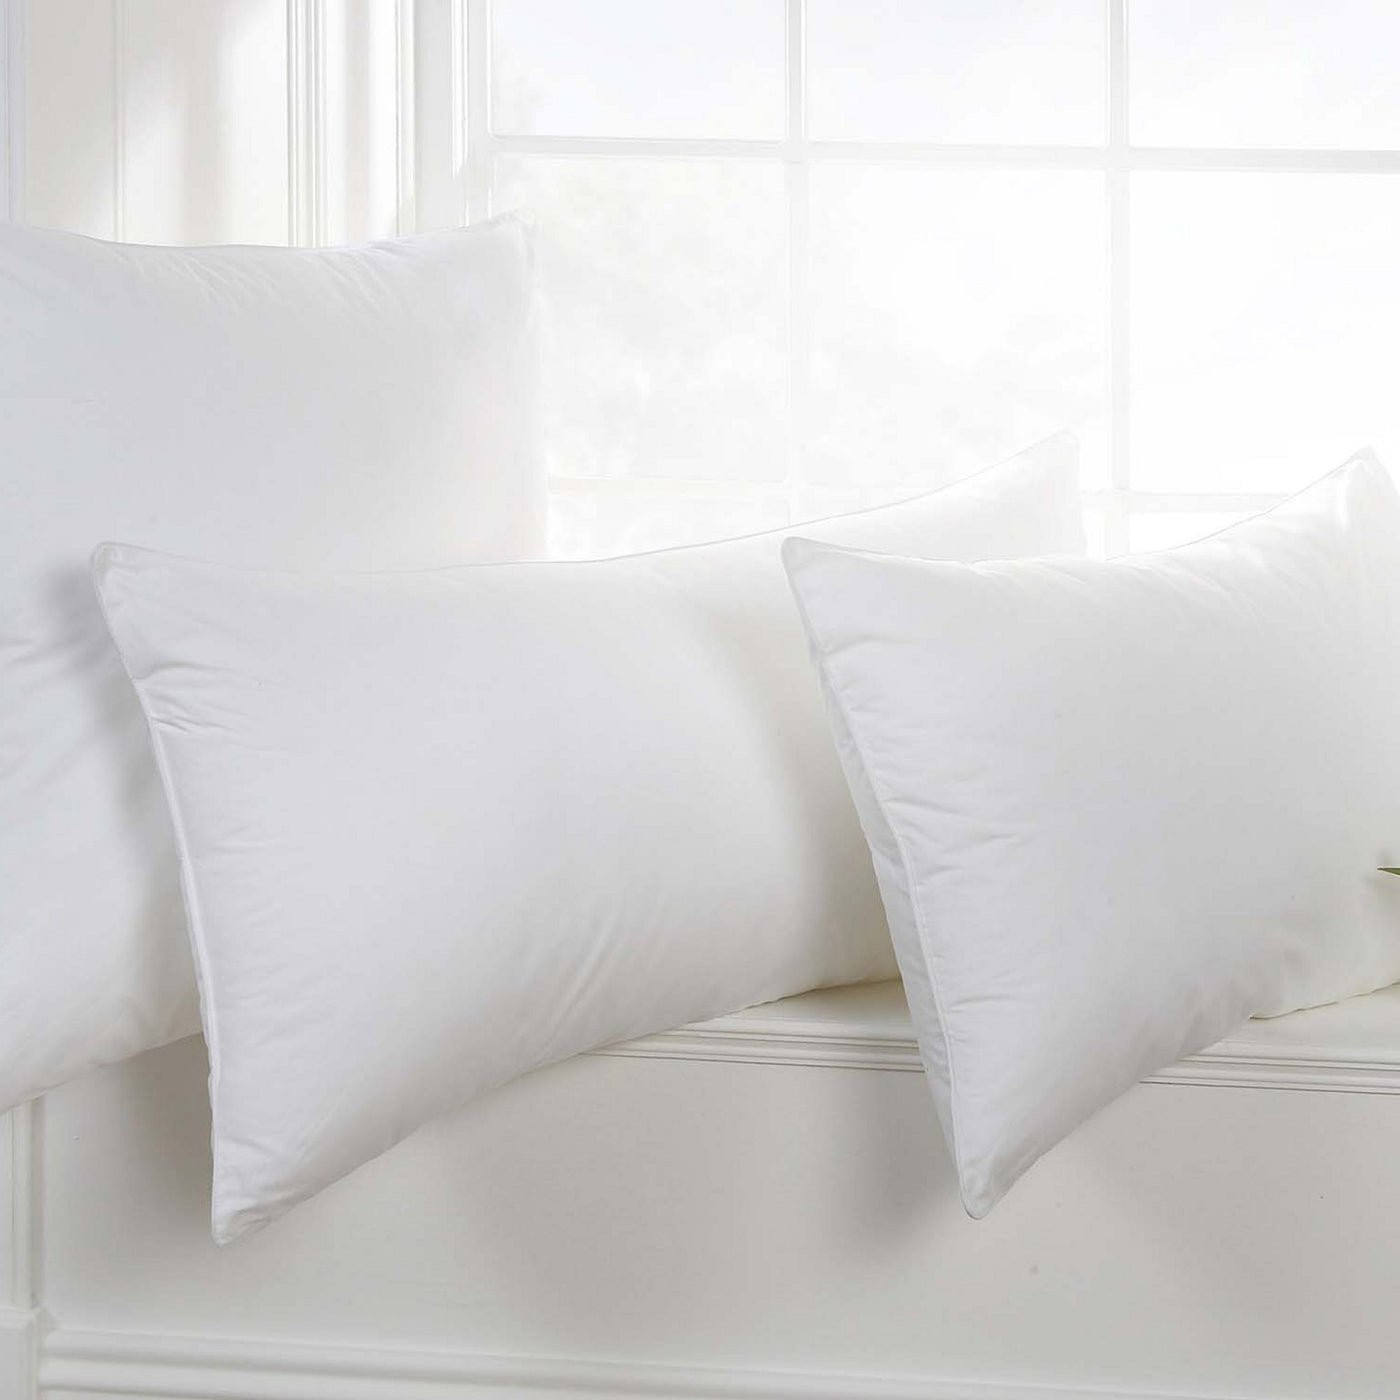 Ontario Luxury 100% Down Pillow Collection